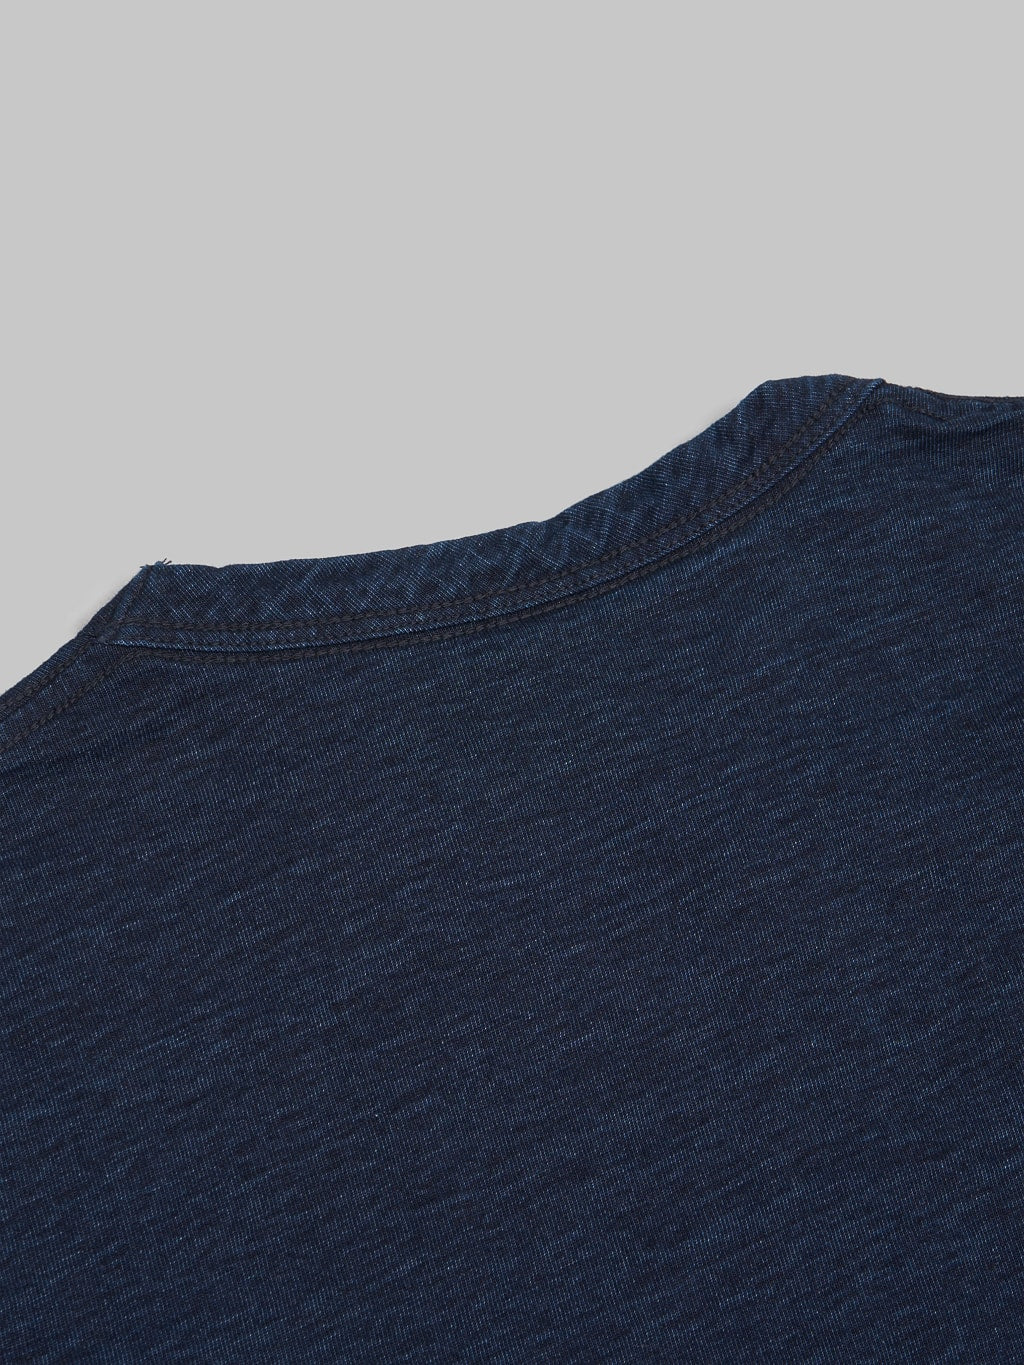 Pure blue japan indigo dyed crewneck tshirt cotton detail